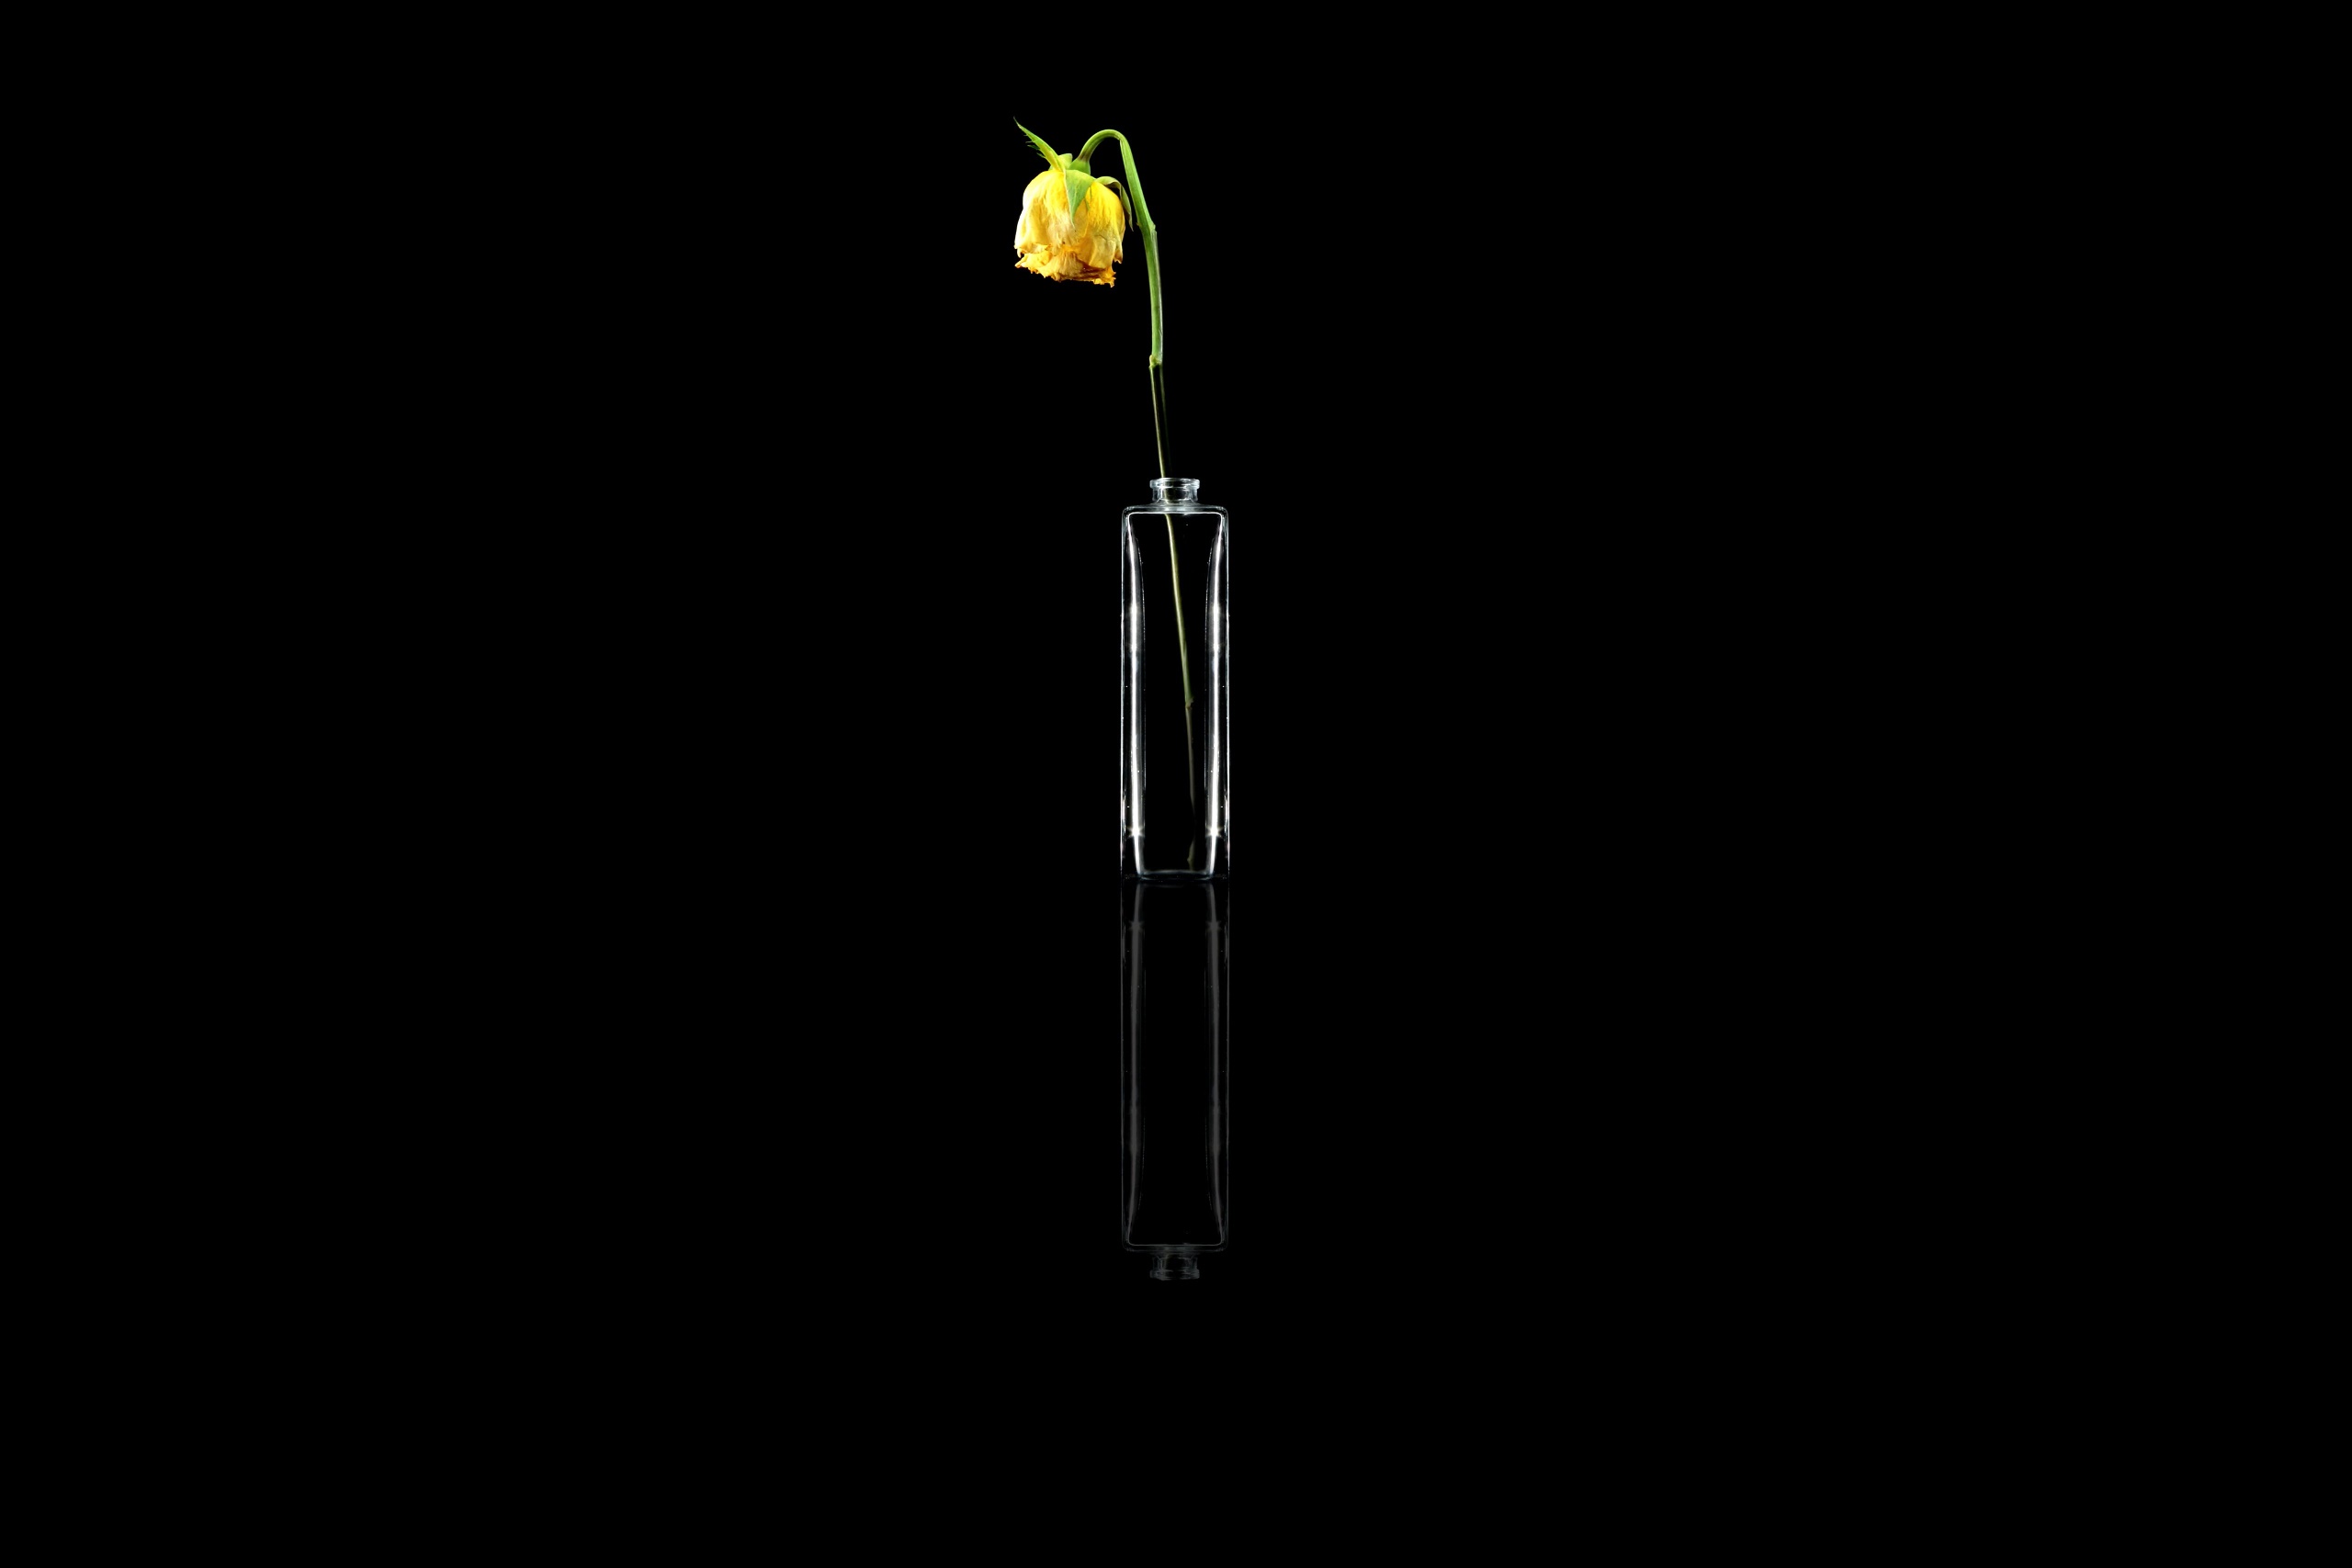 General 2560x1707 minimalism flowers plants vases simple background low light